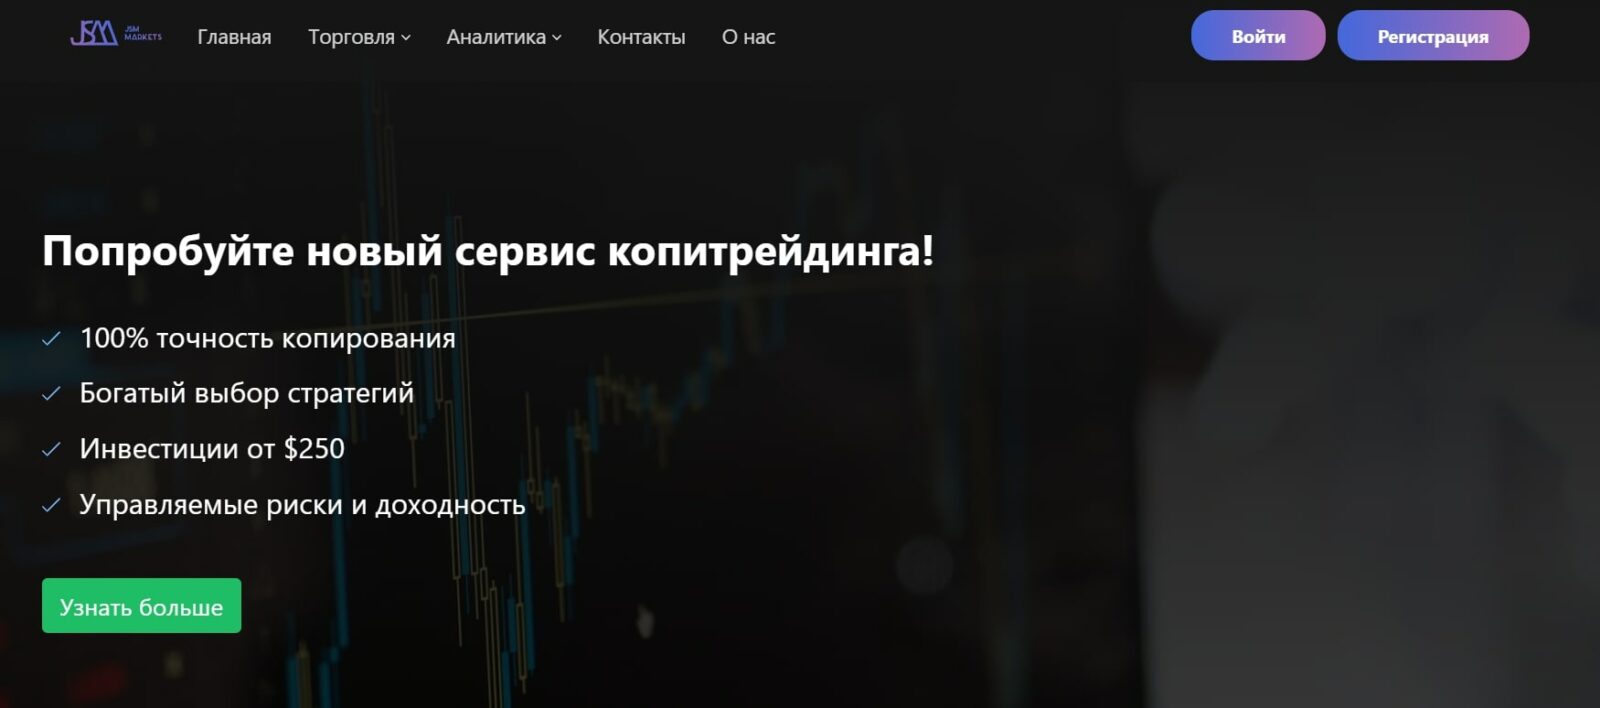 Сайт брокера Jsm Markets.com